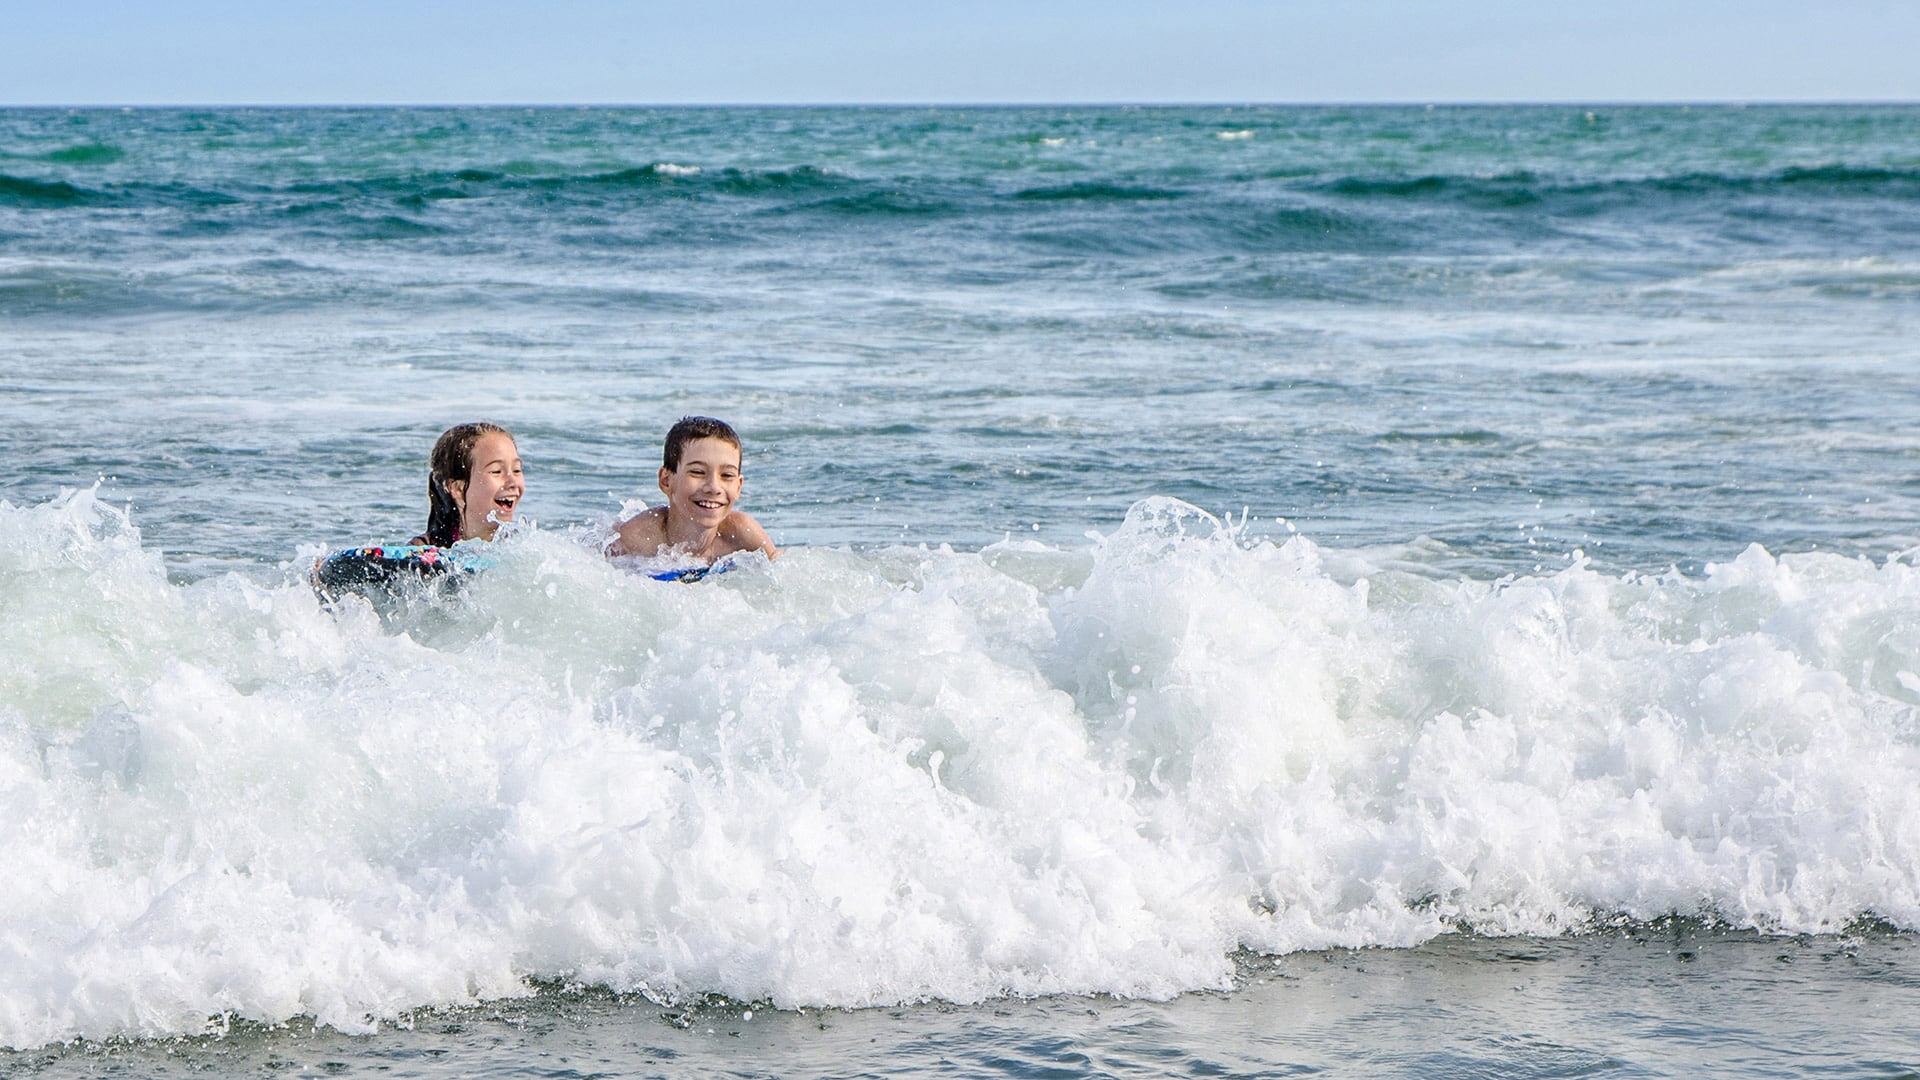 Boy and girl boogie board in ocean.